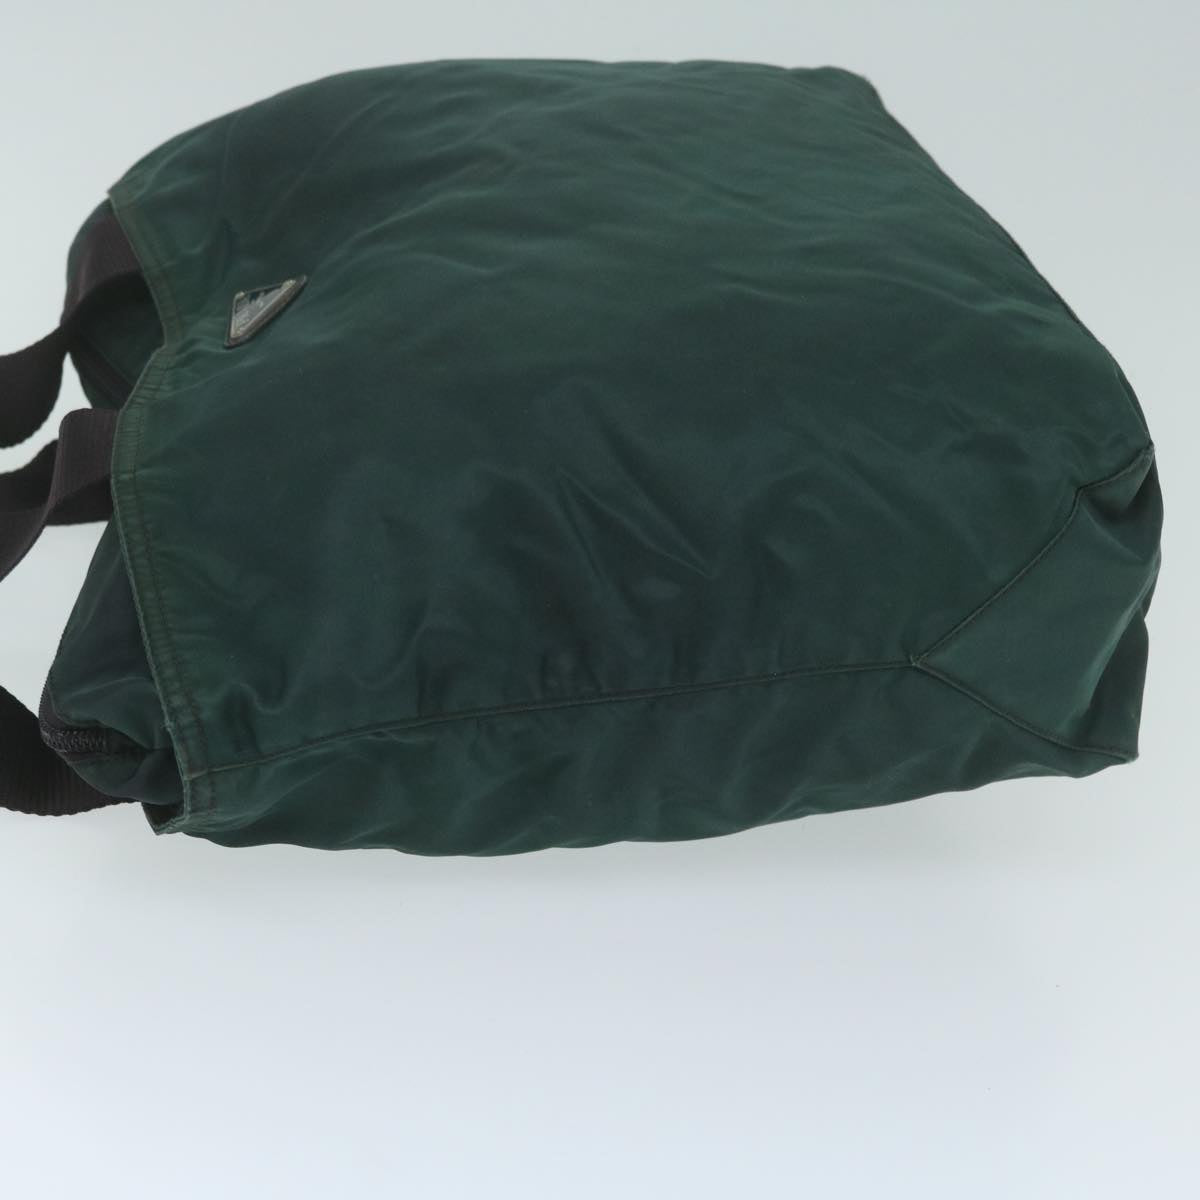 PRADA Tote Bag Nylon Green Auth ac2533